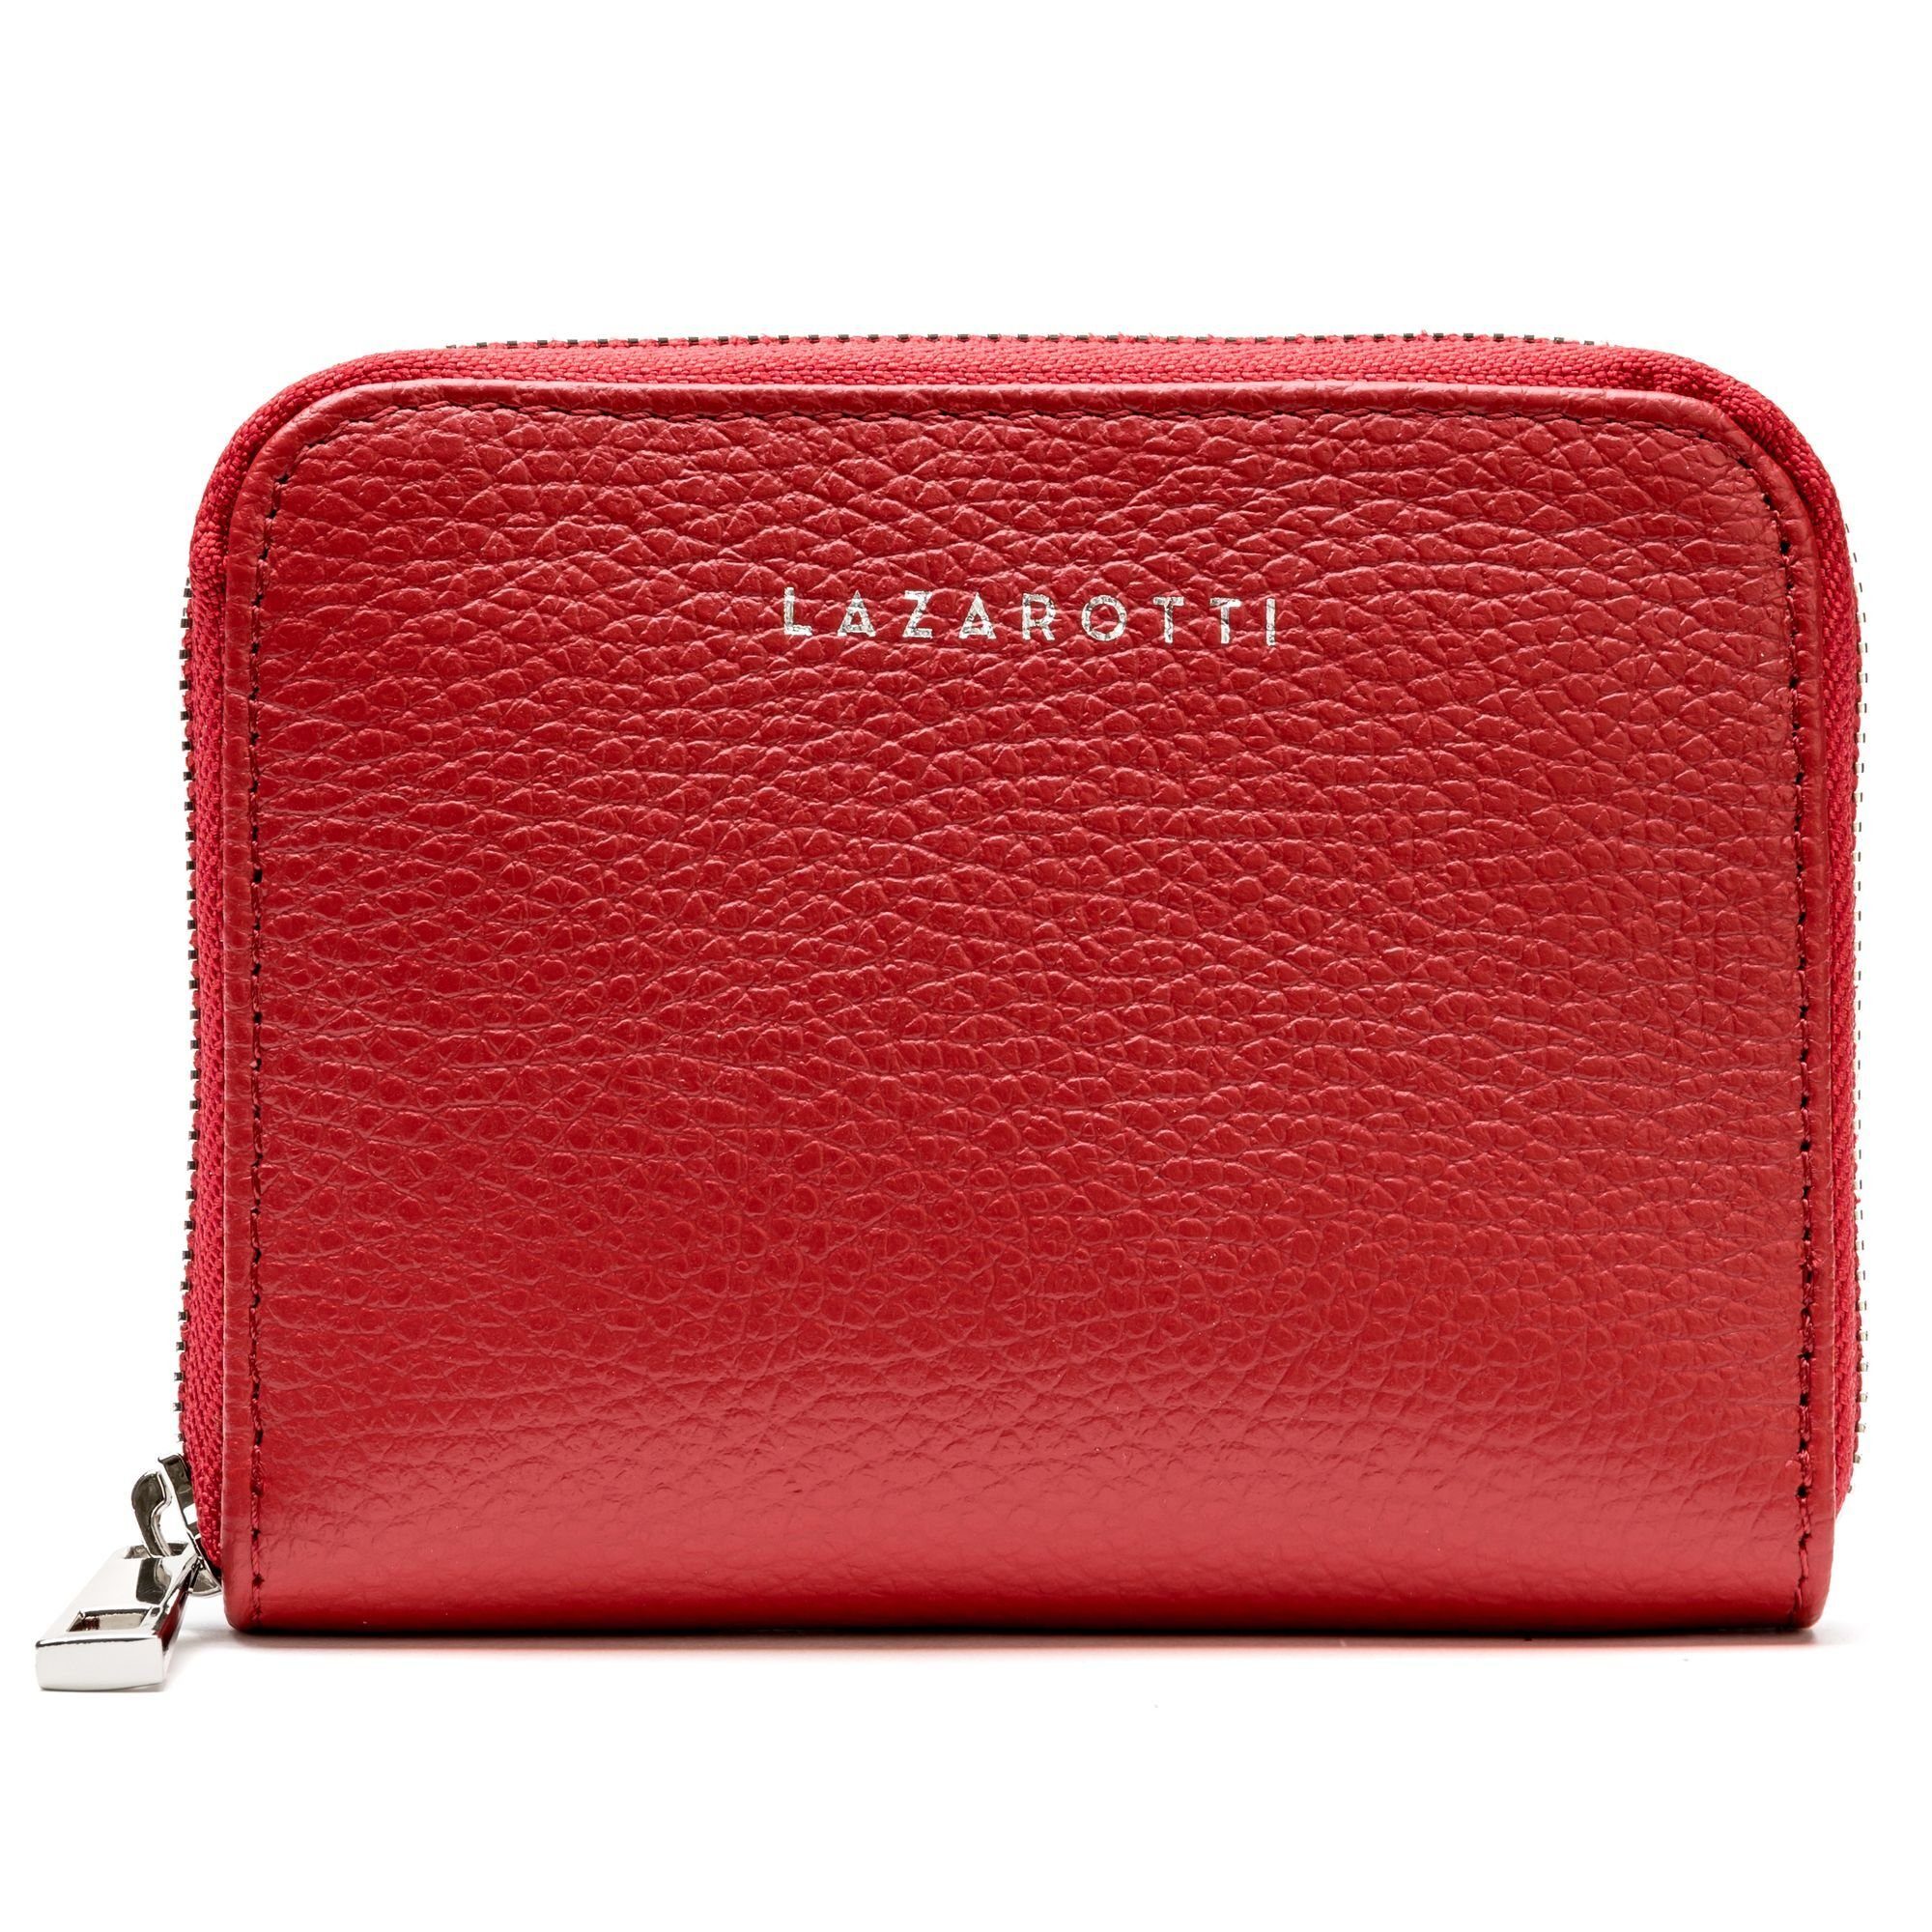 Geldbörse Leather, Leder Lazarotti Milano red